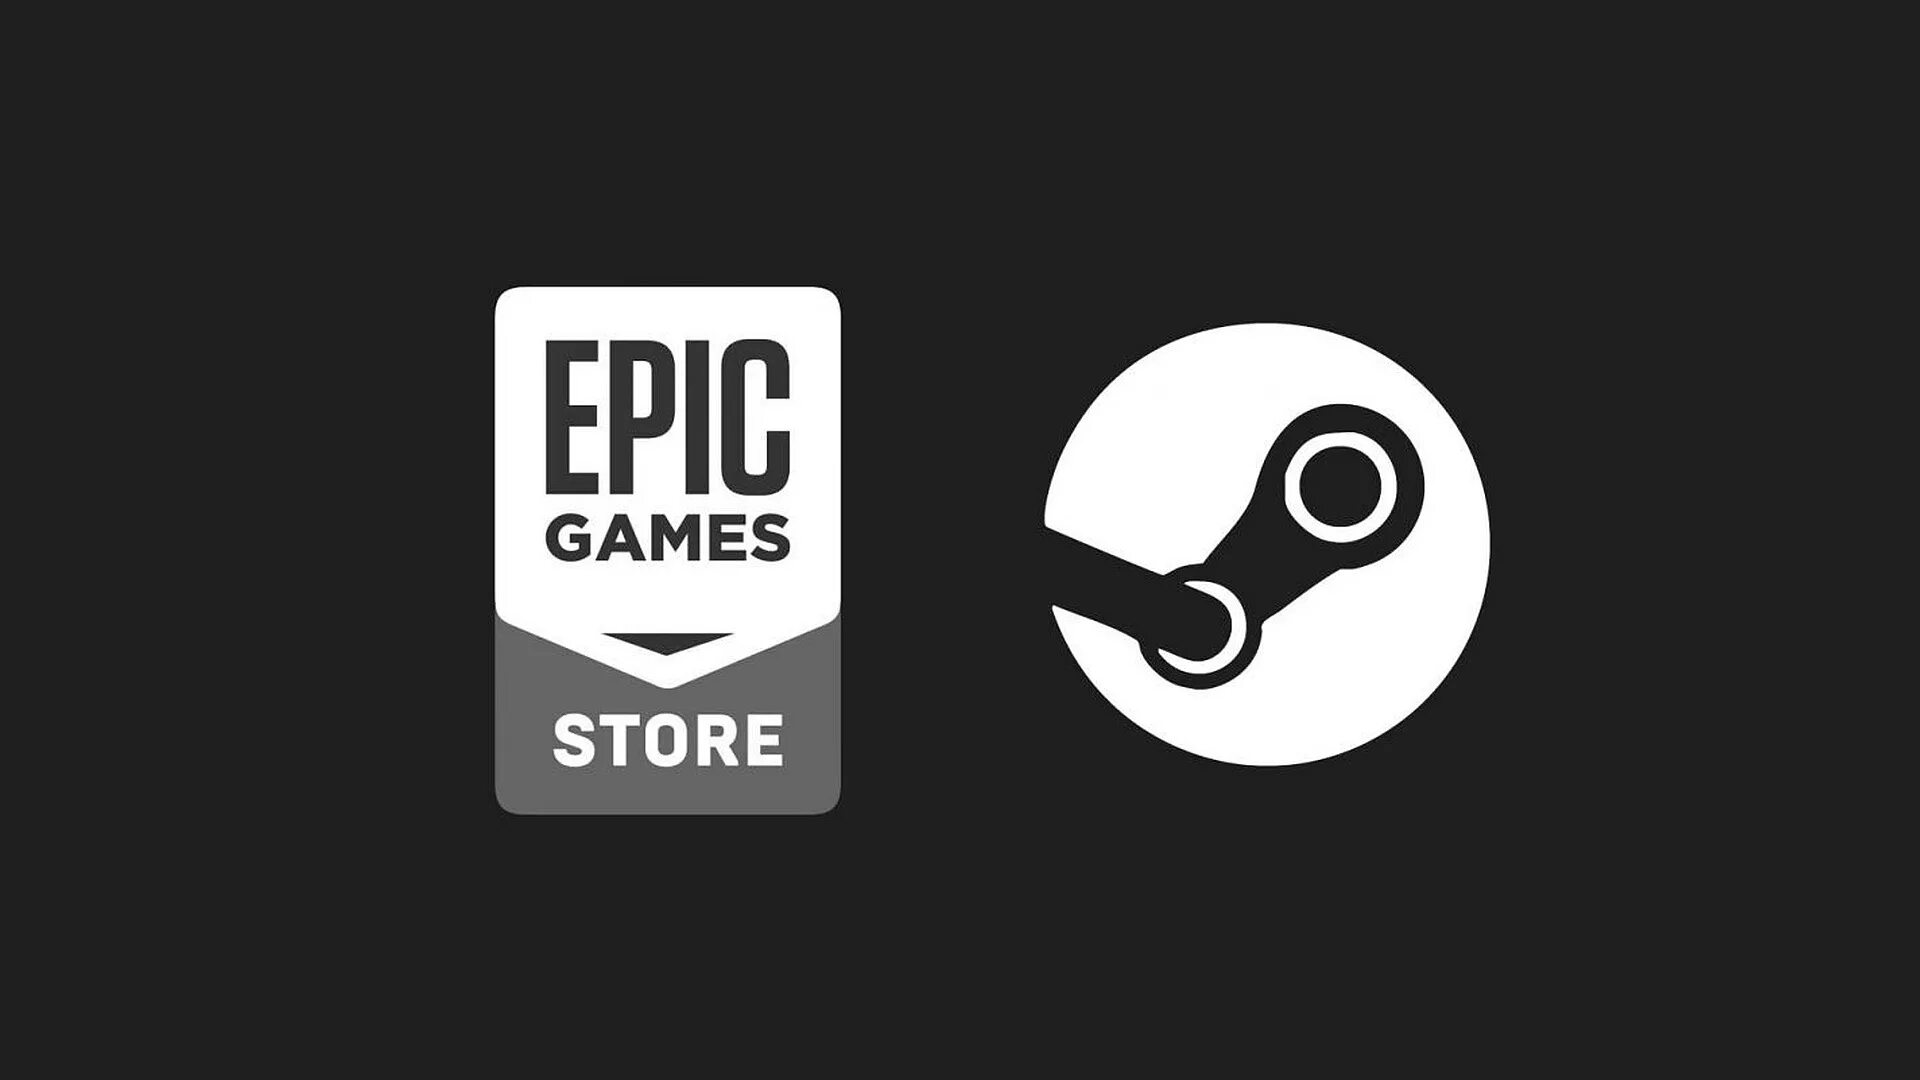 Steam games store. Epic games. Steam vs Epic games. Steam games. Компания стим.